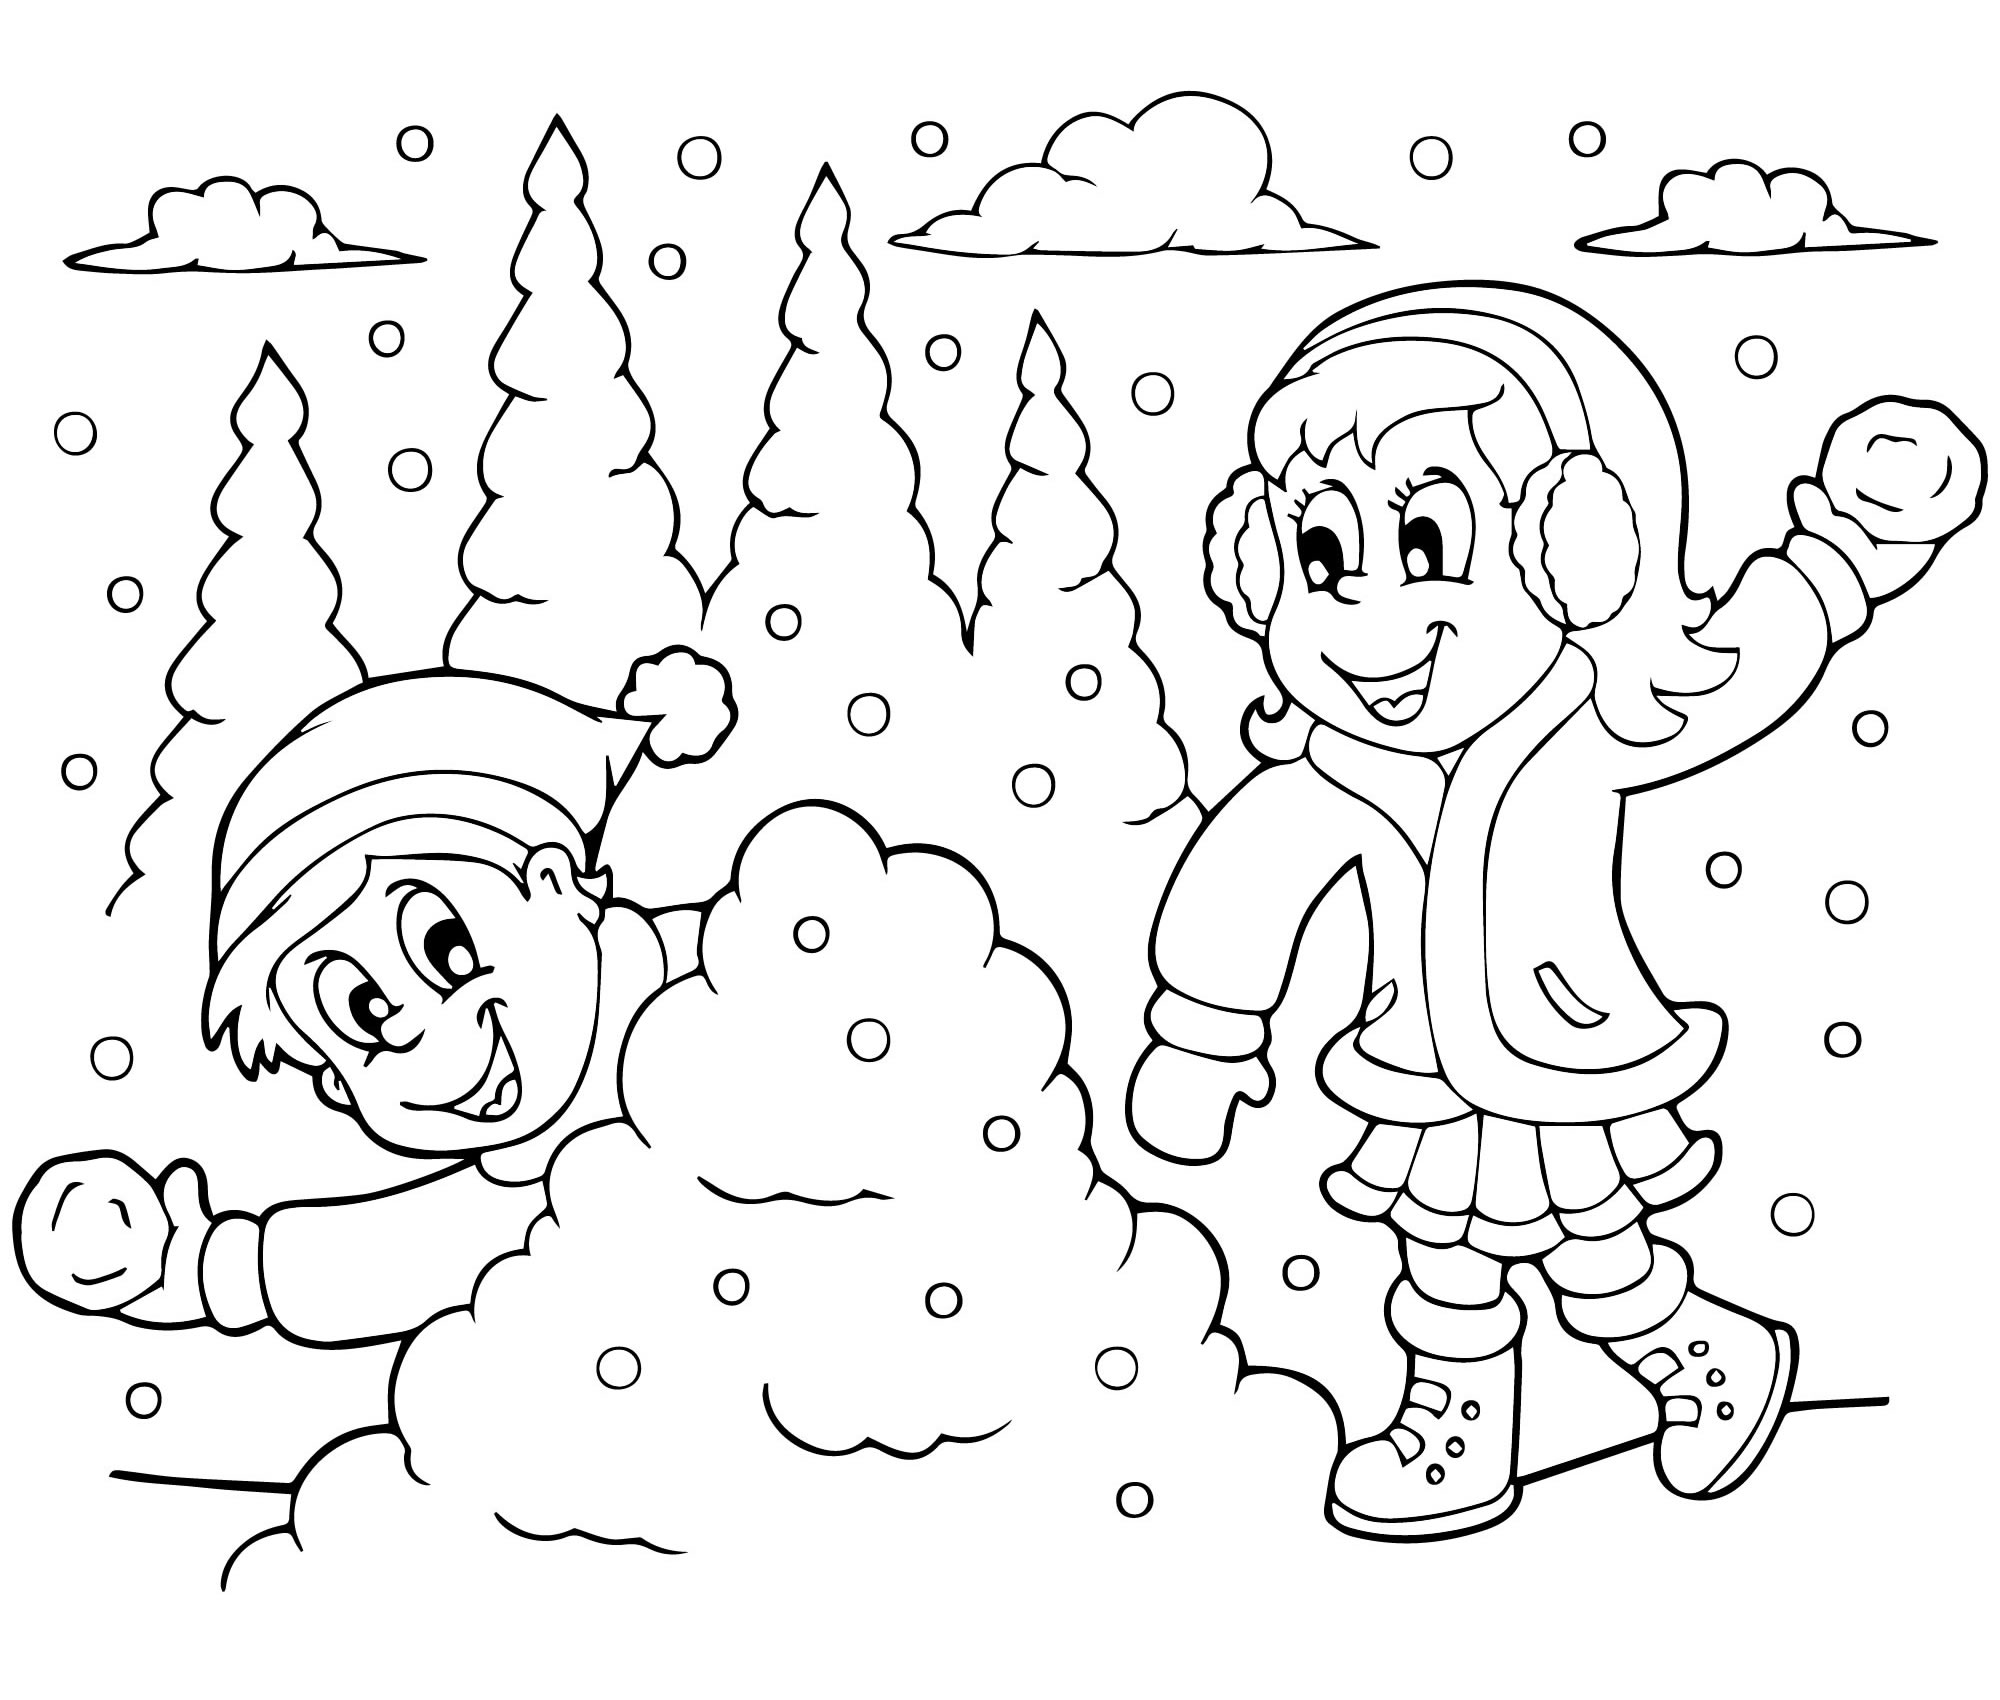 Fun winter coloring book for kids